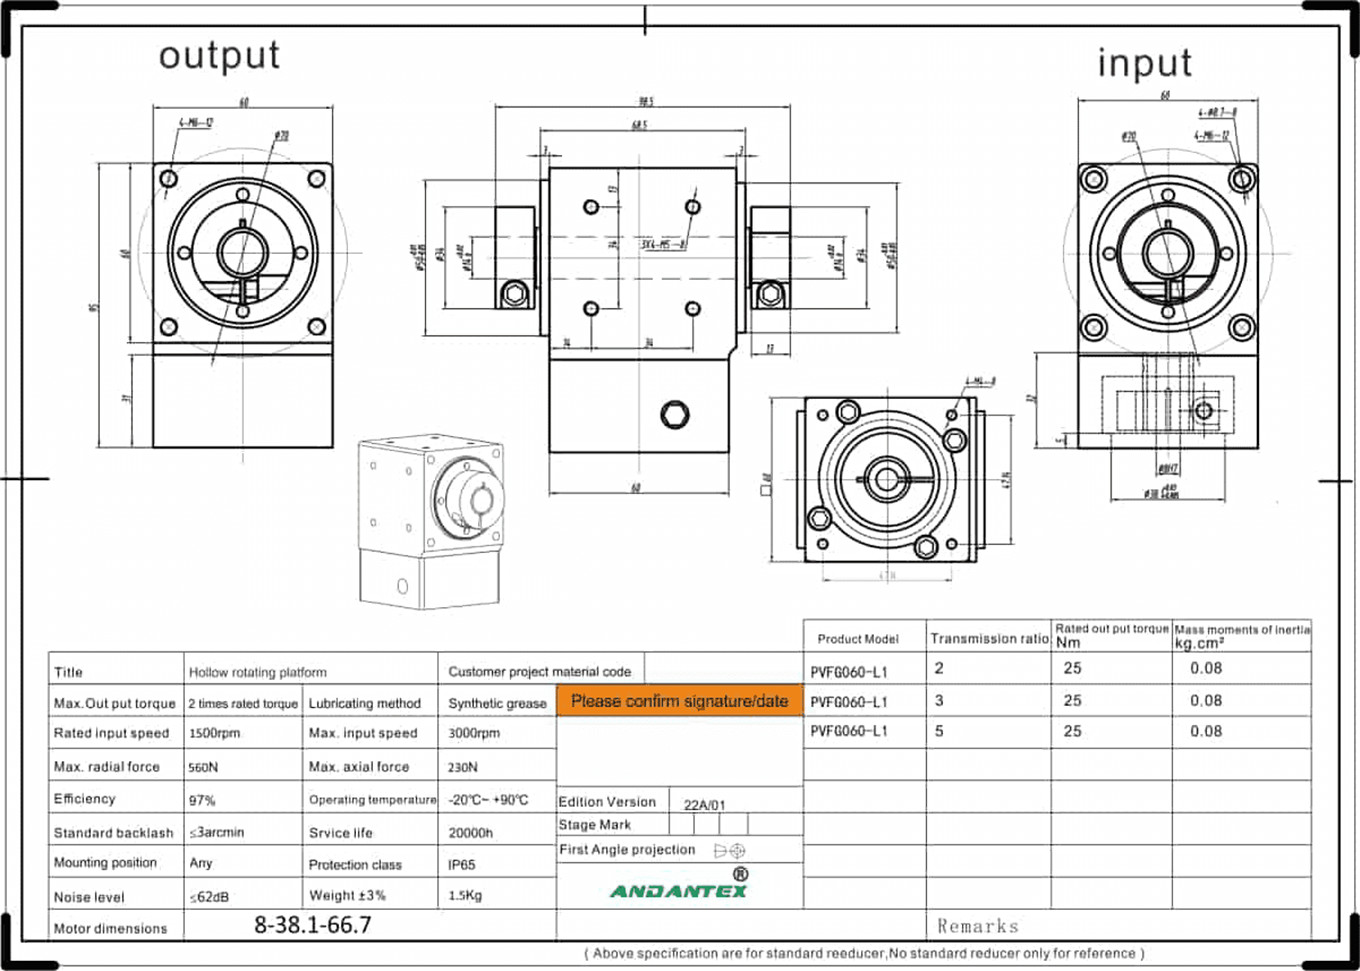 Andantex pvfg060 -5 comutador de dois furos para a indústria metalúrgica-01